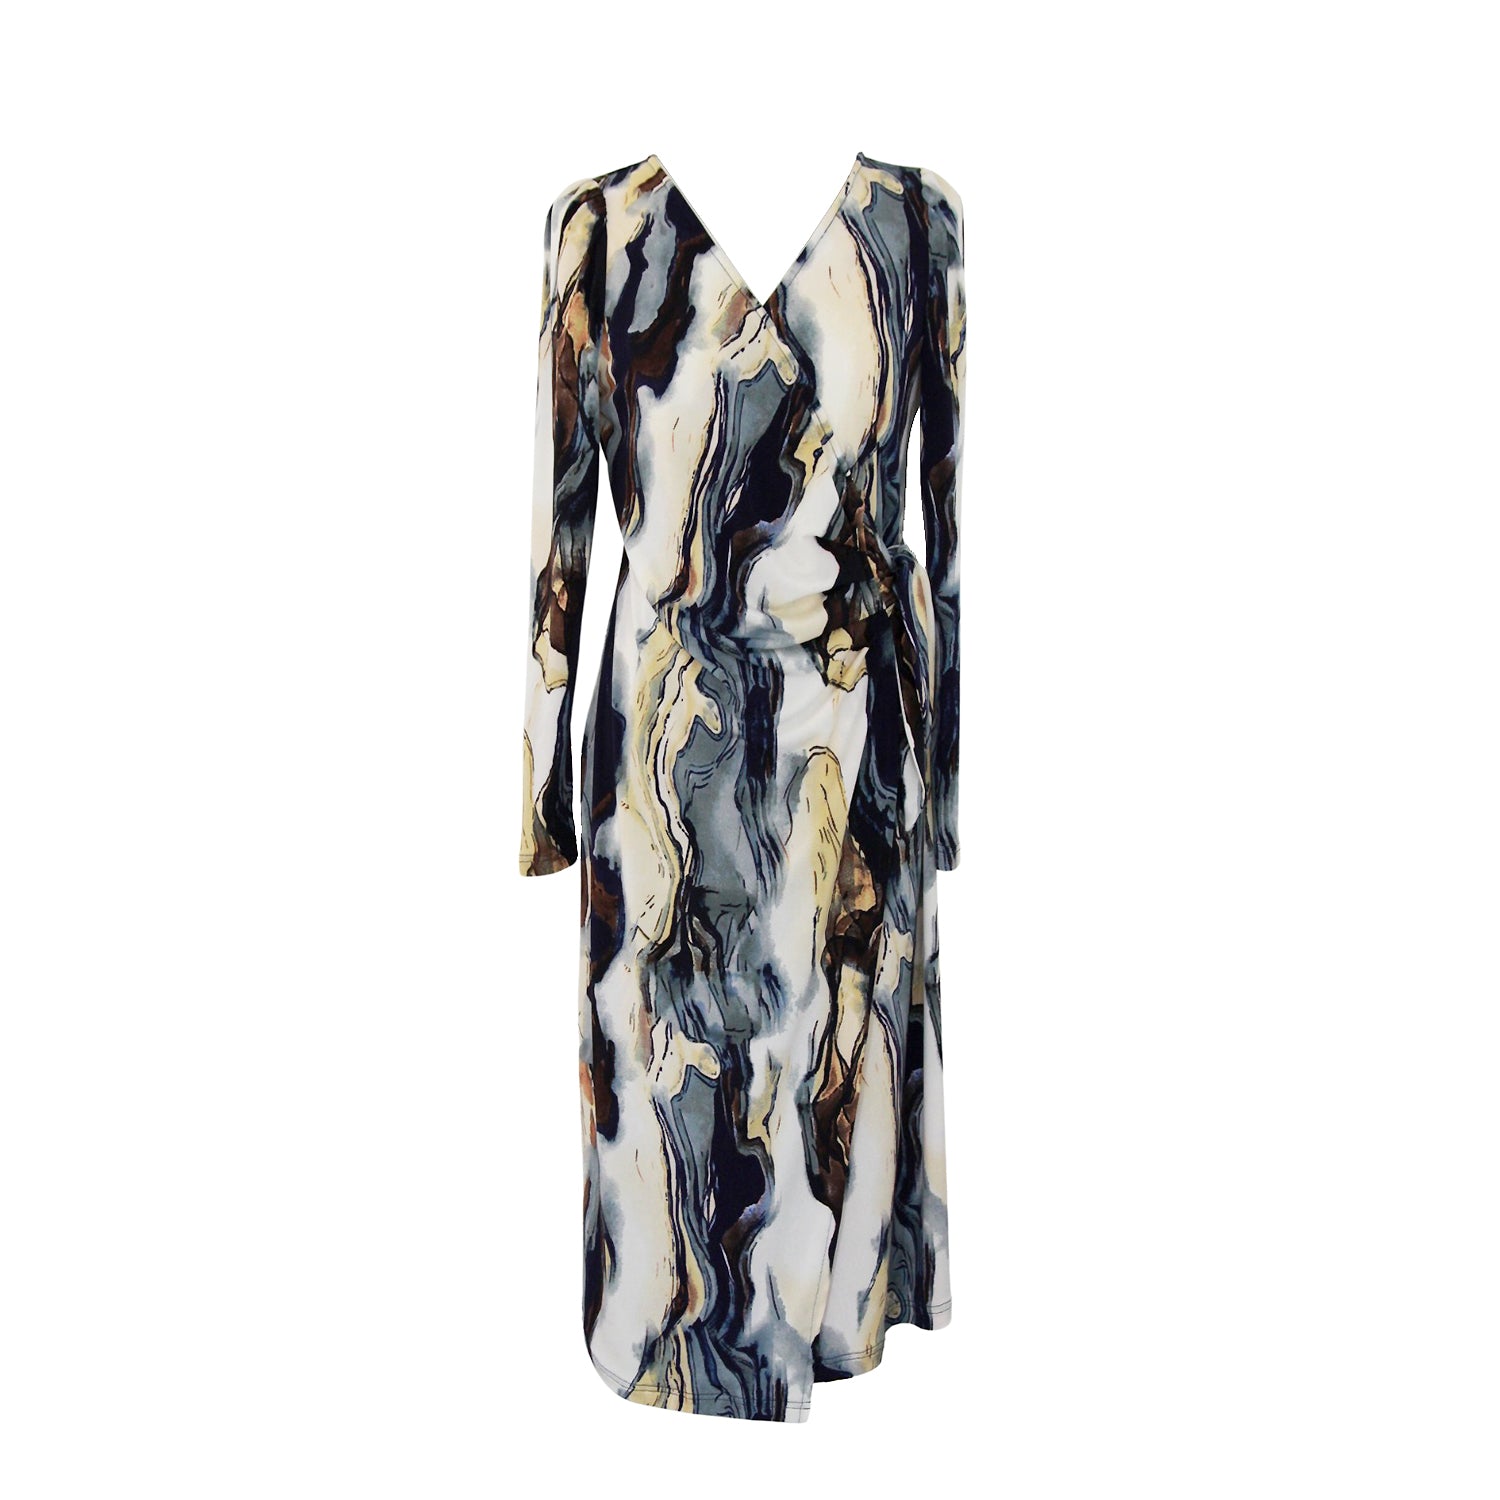 Gosia Orlowska's Ocean Side Wrap Dress Collection